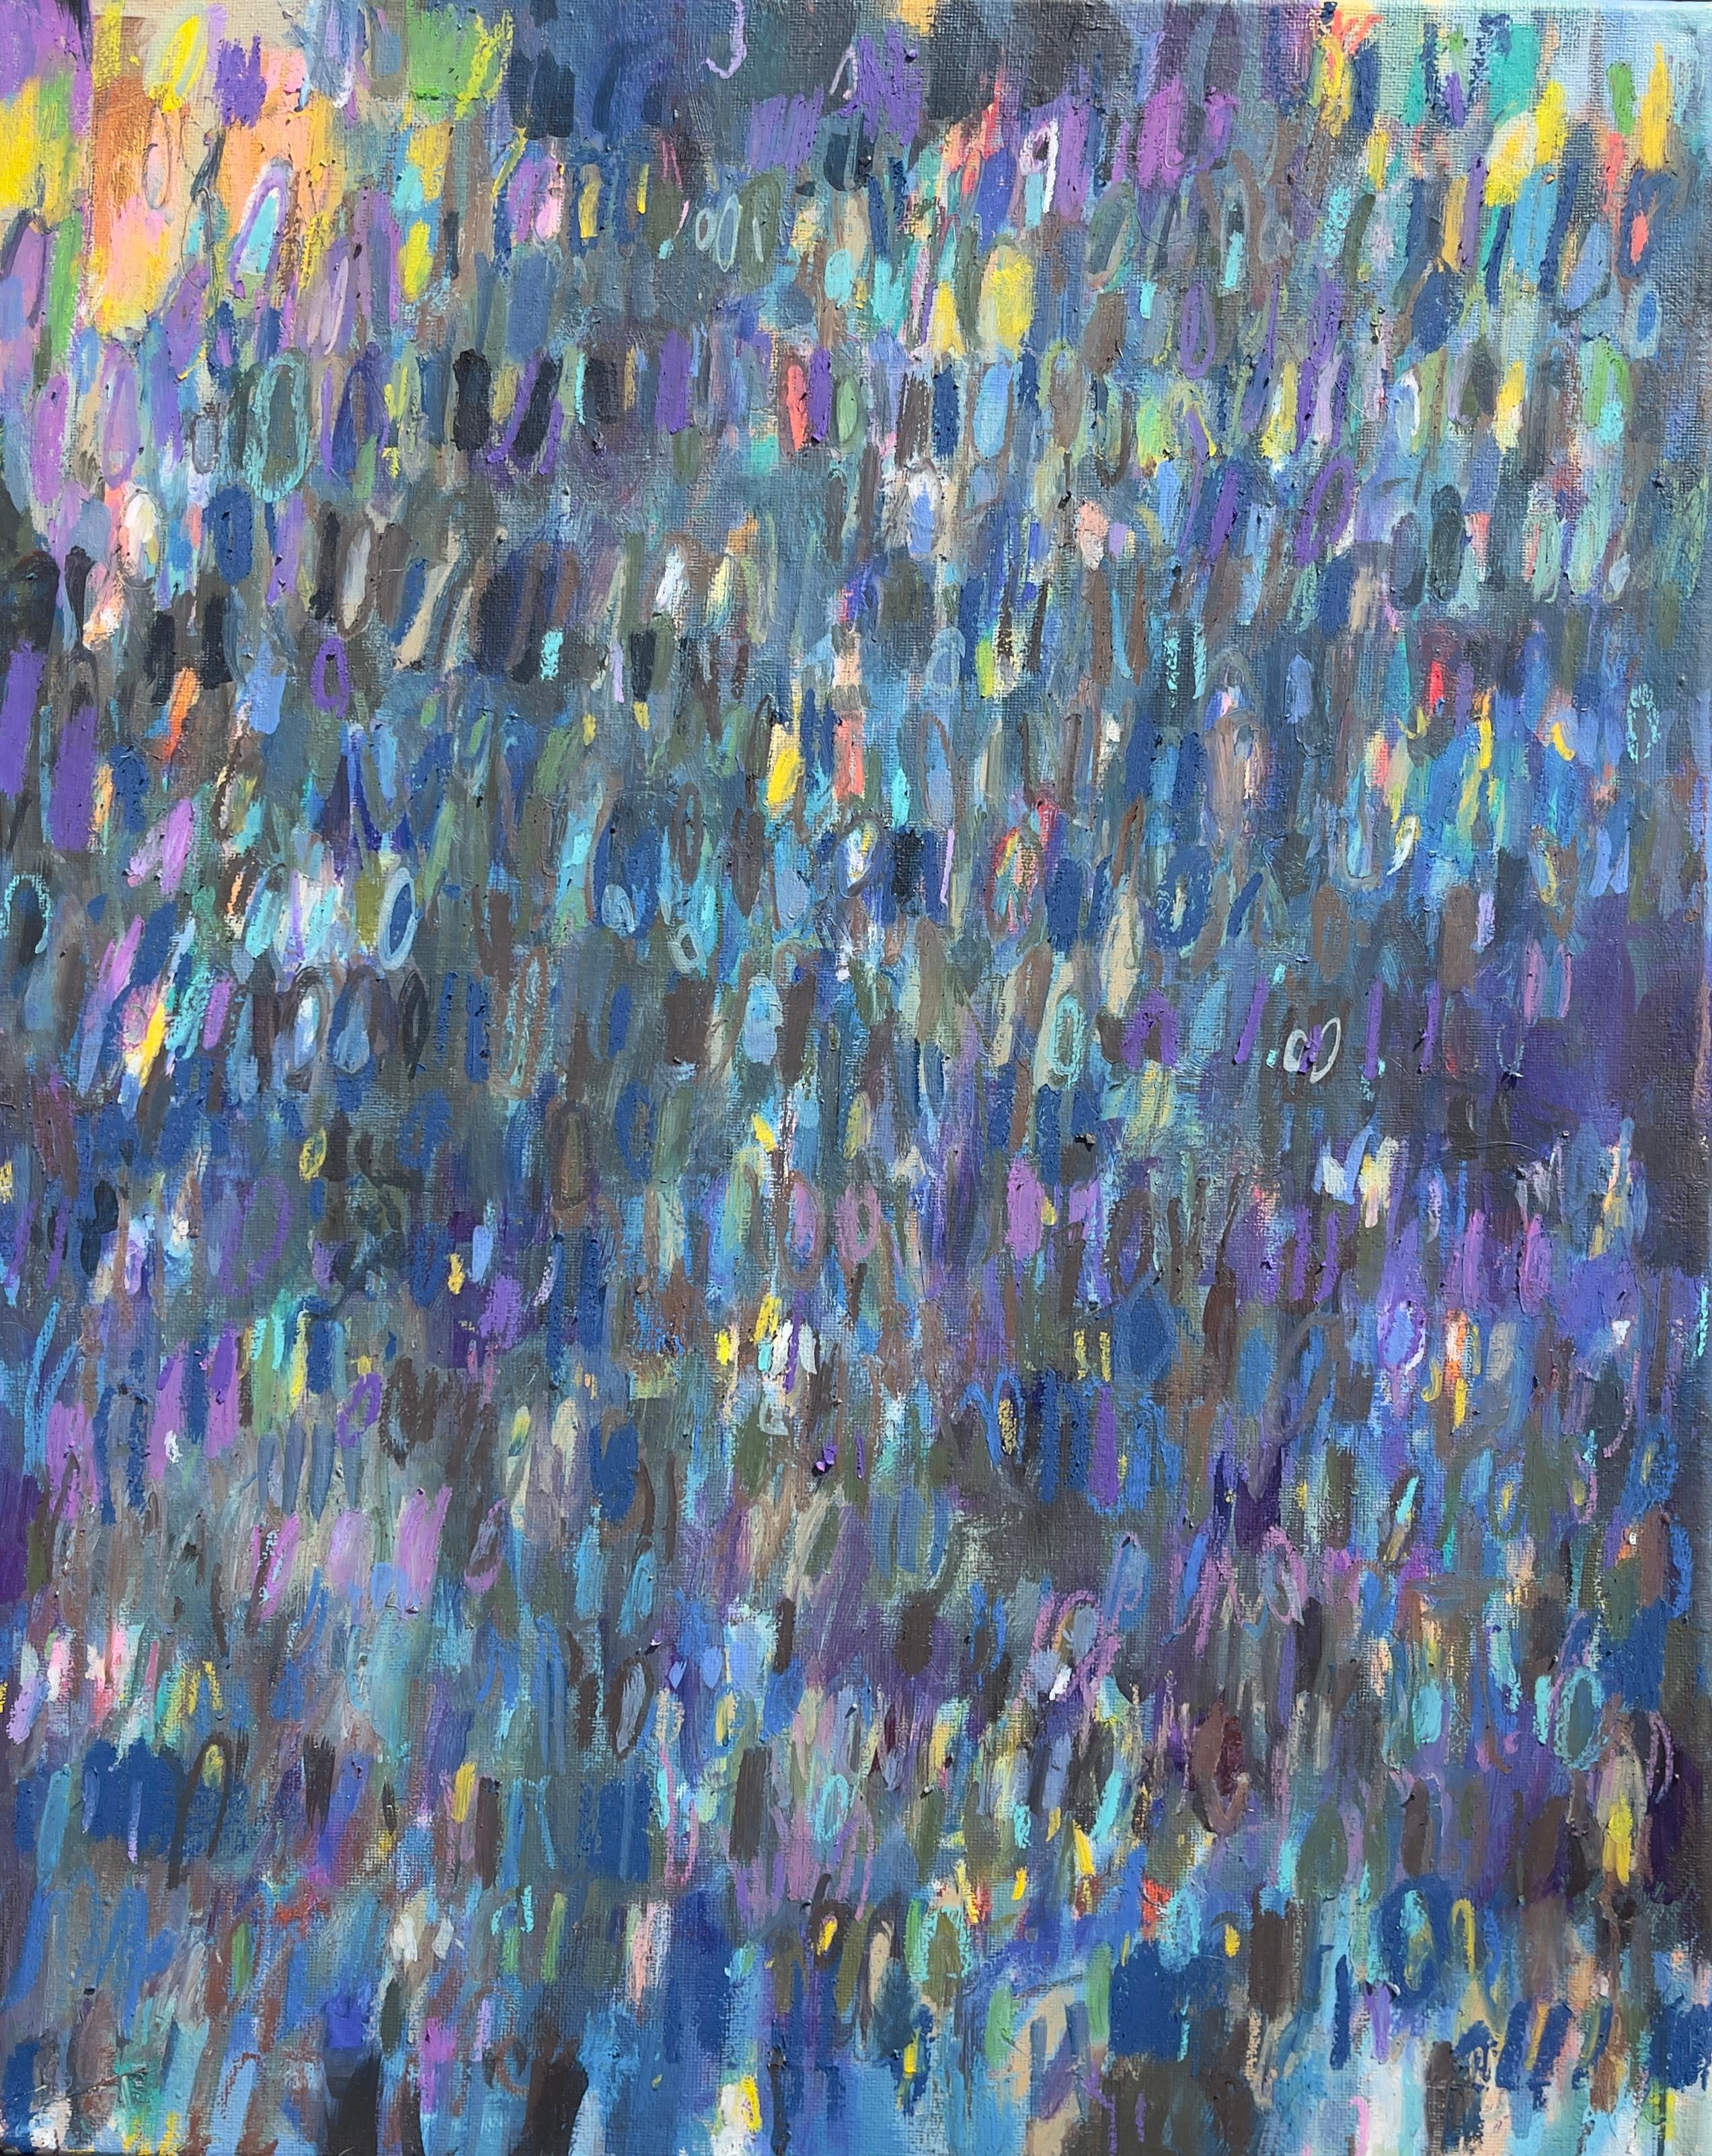 Hours violettes, peinture abstraite - Mixed Media Art de Ian  Hargrove